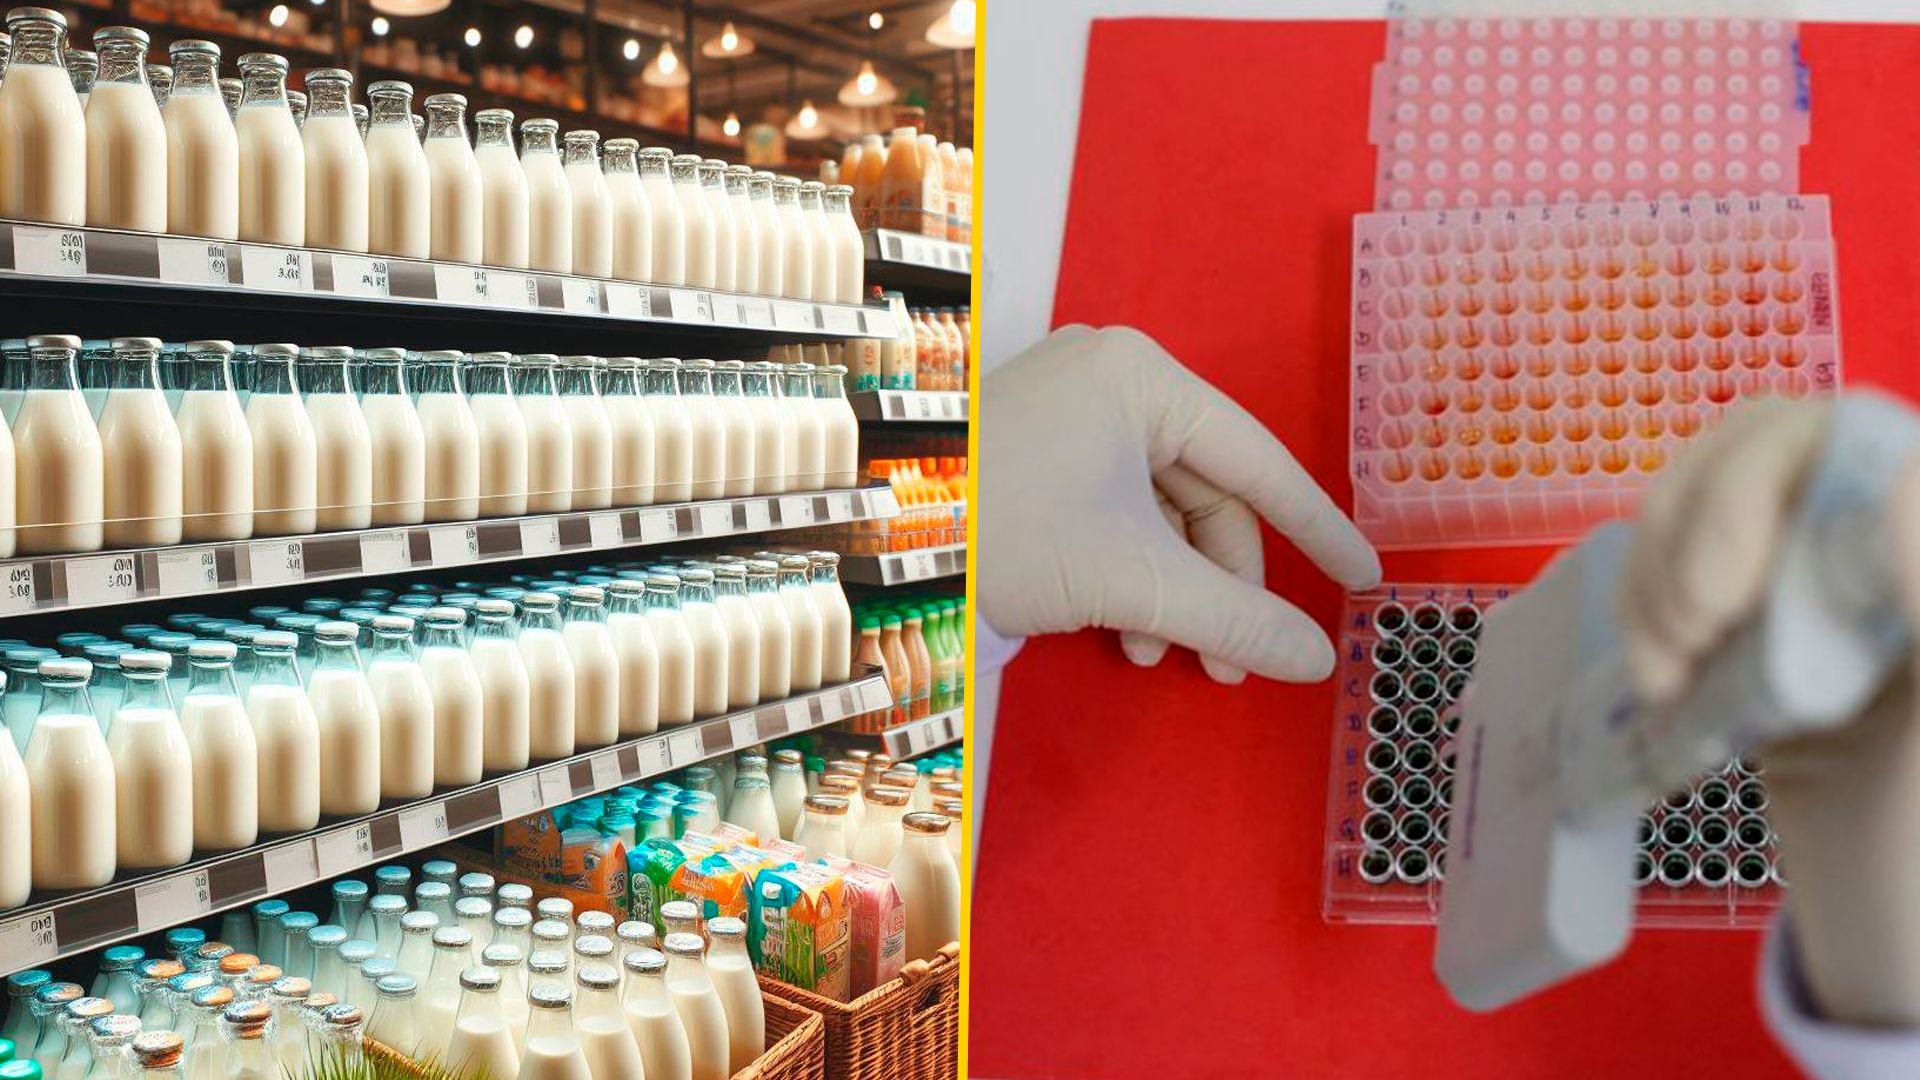 Fragmentos de gripe aviar encontrados en leche de supermercados en EE.UU.